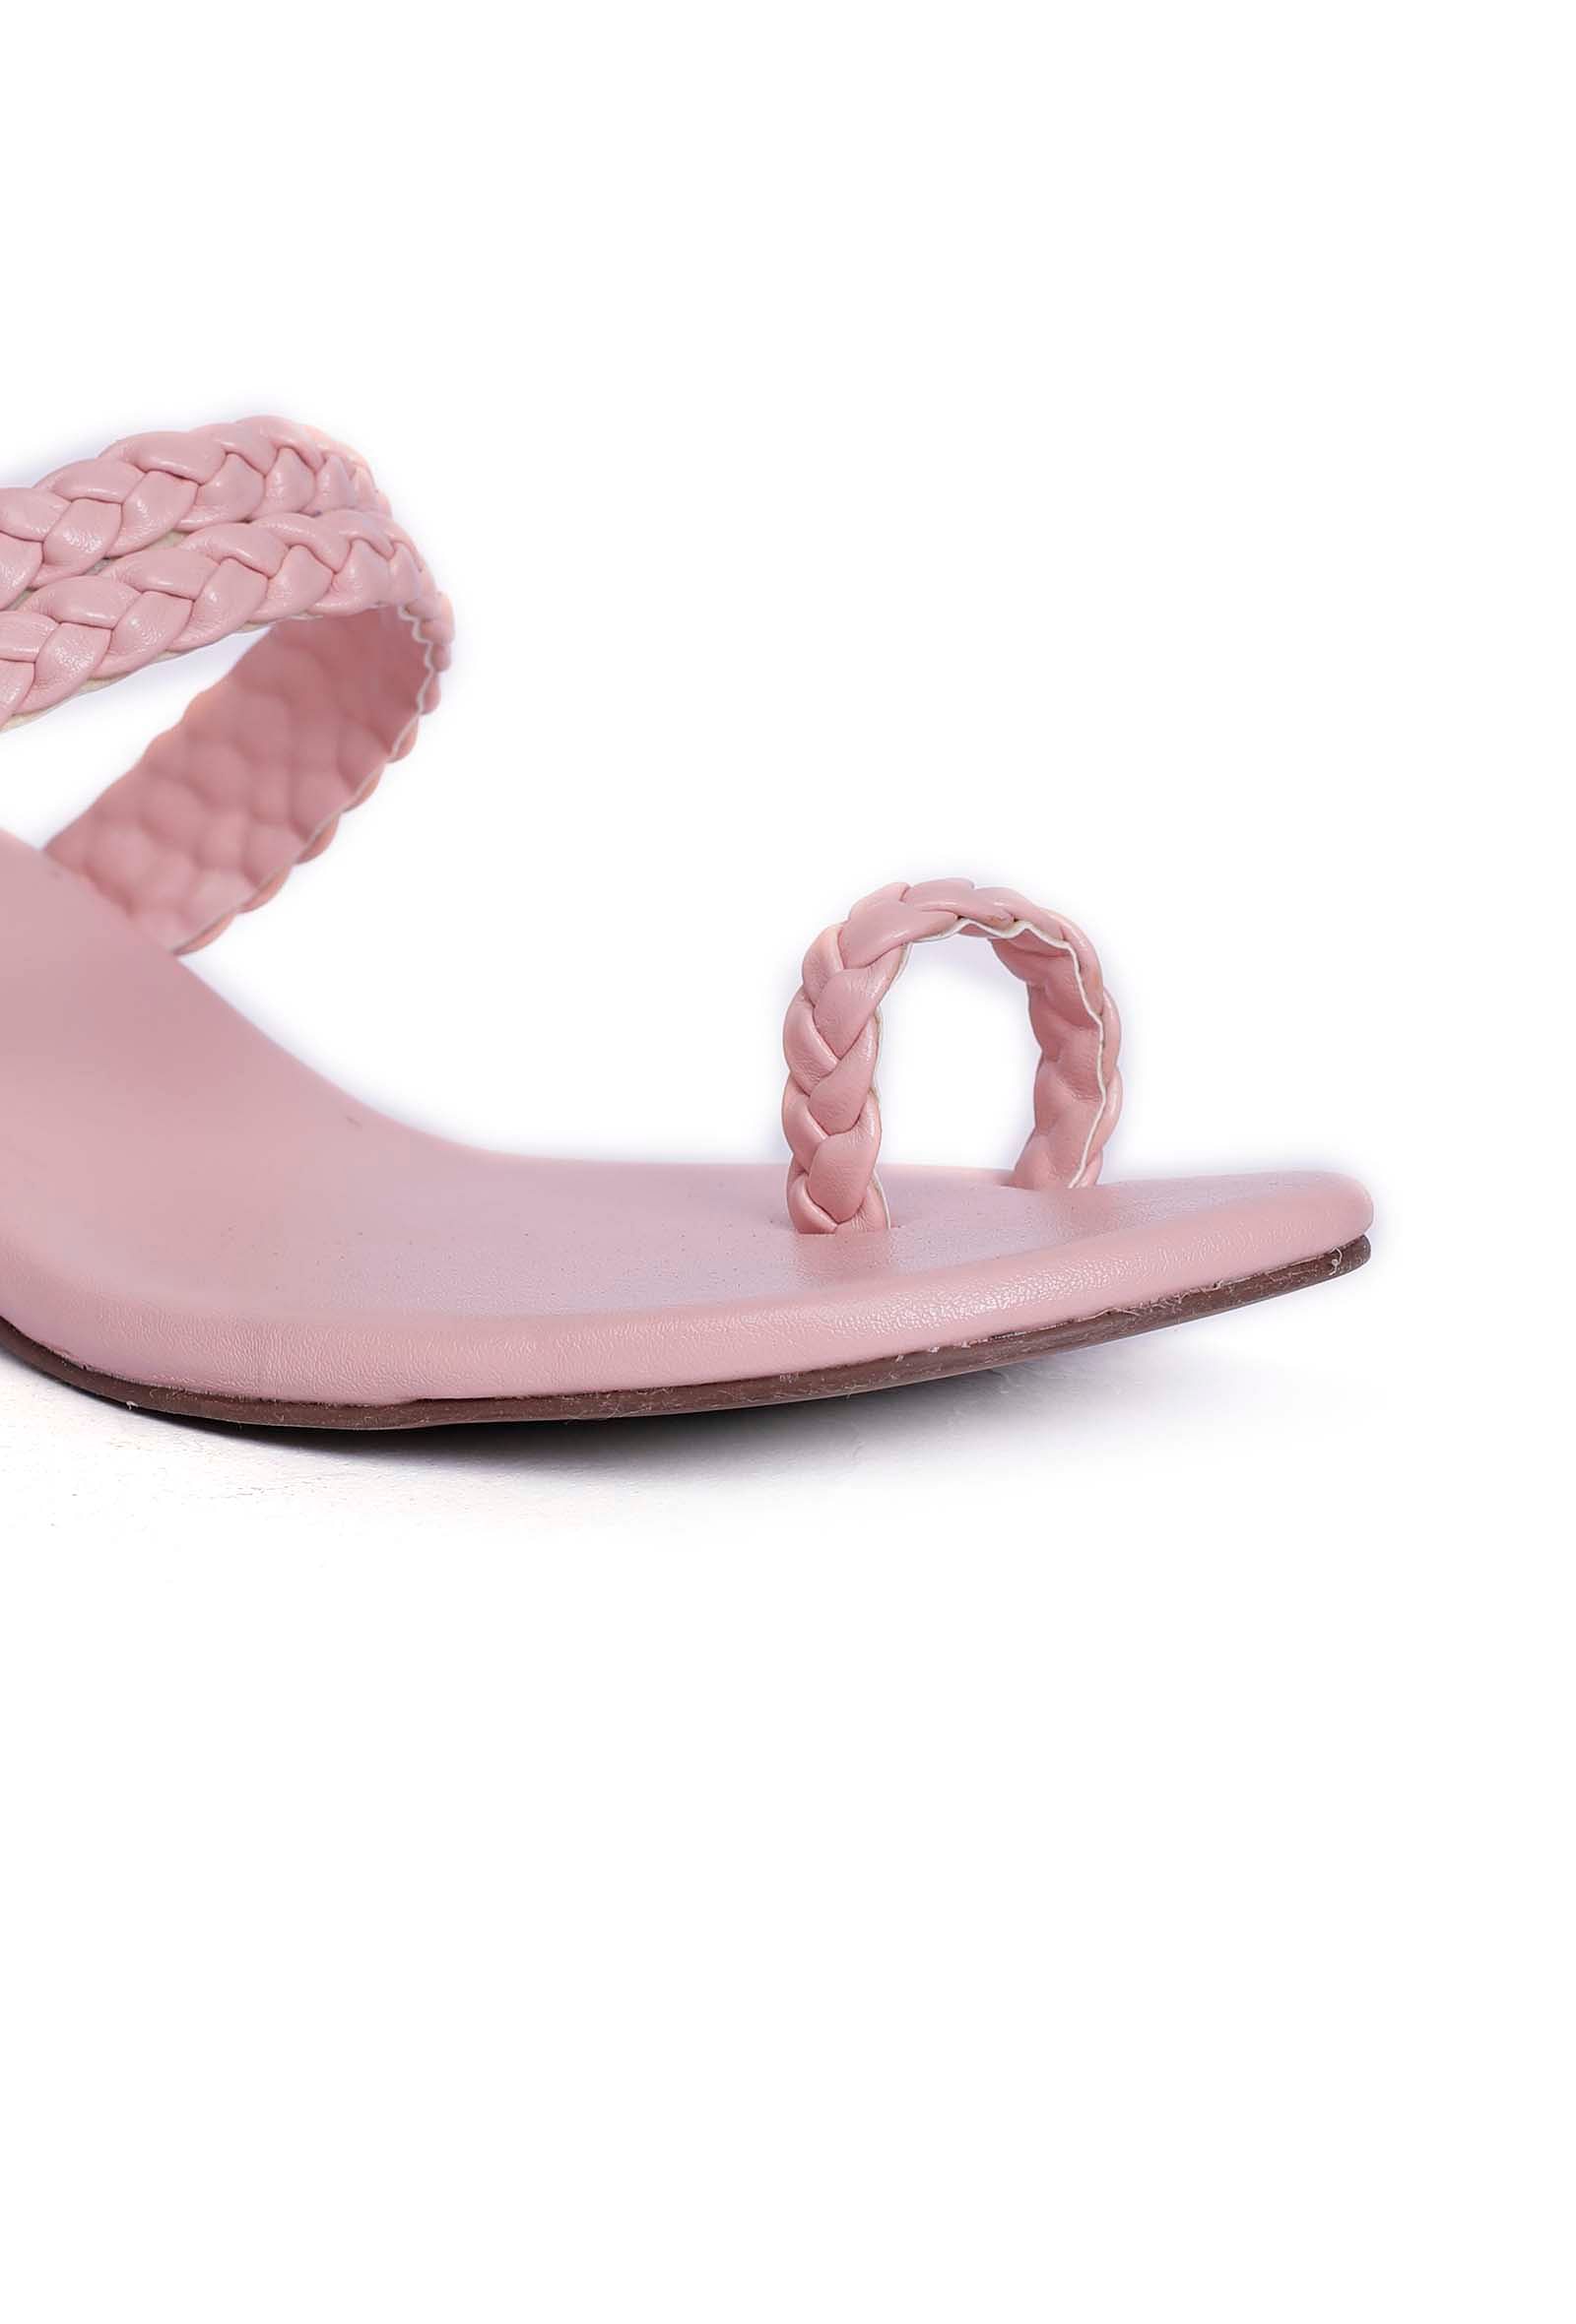 New MICHAEL KORS Women's Sz 8.5 Arden T-Strap Sandals High Heels Silver  Shoes | eBay